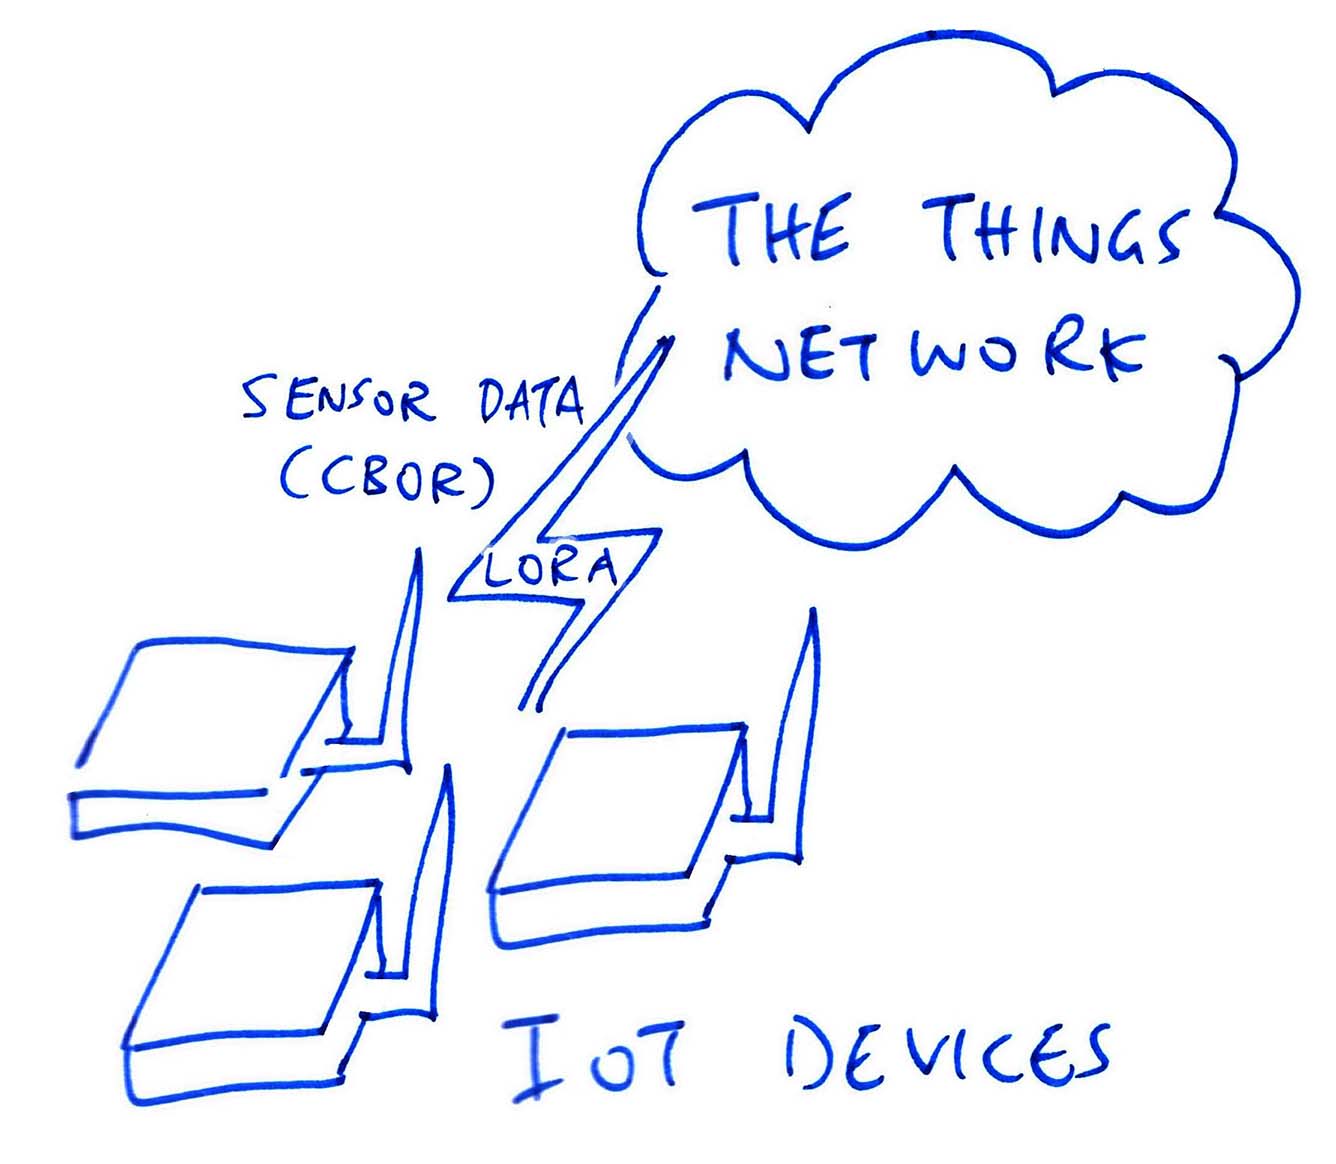 IoT Sensor Device transmits CBOR Sensor Data to The Things Network